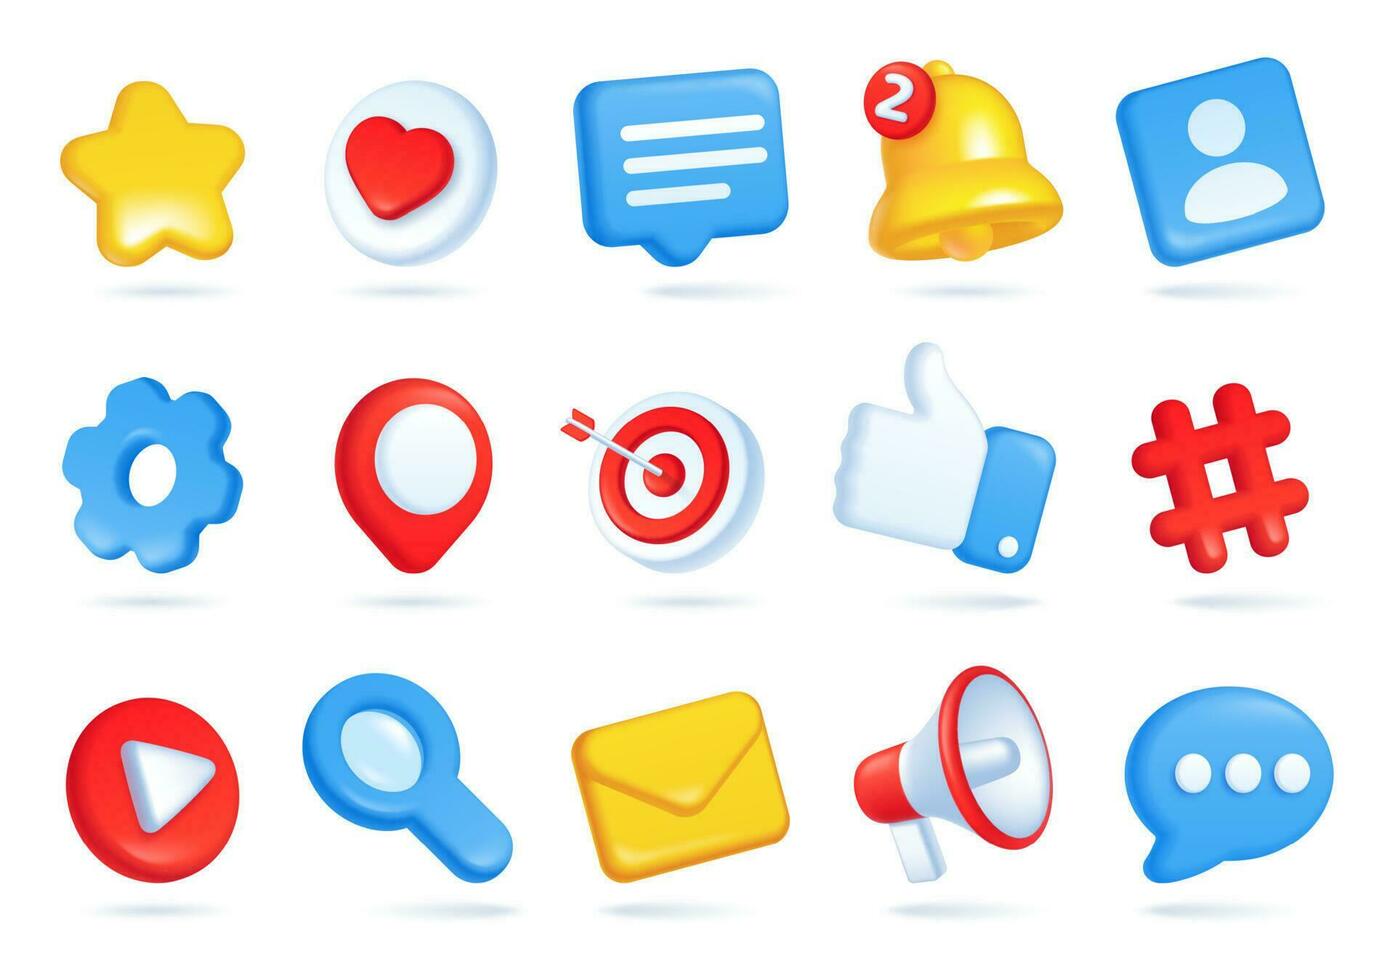 3d social media icons, online communication, digital marketing symbols. Like button, speech bubble, notification bell, hashtag icon vector set